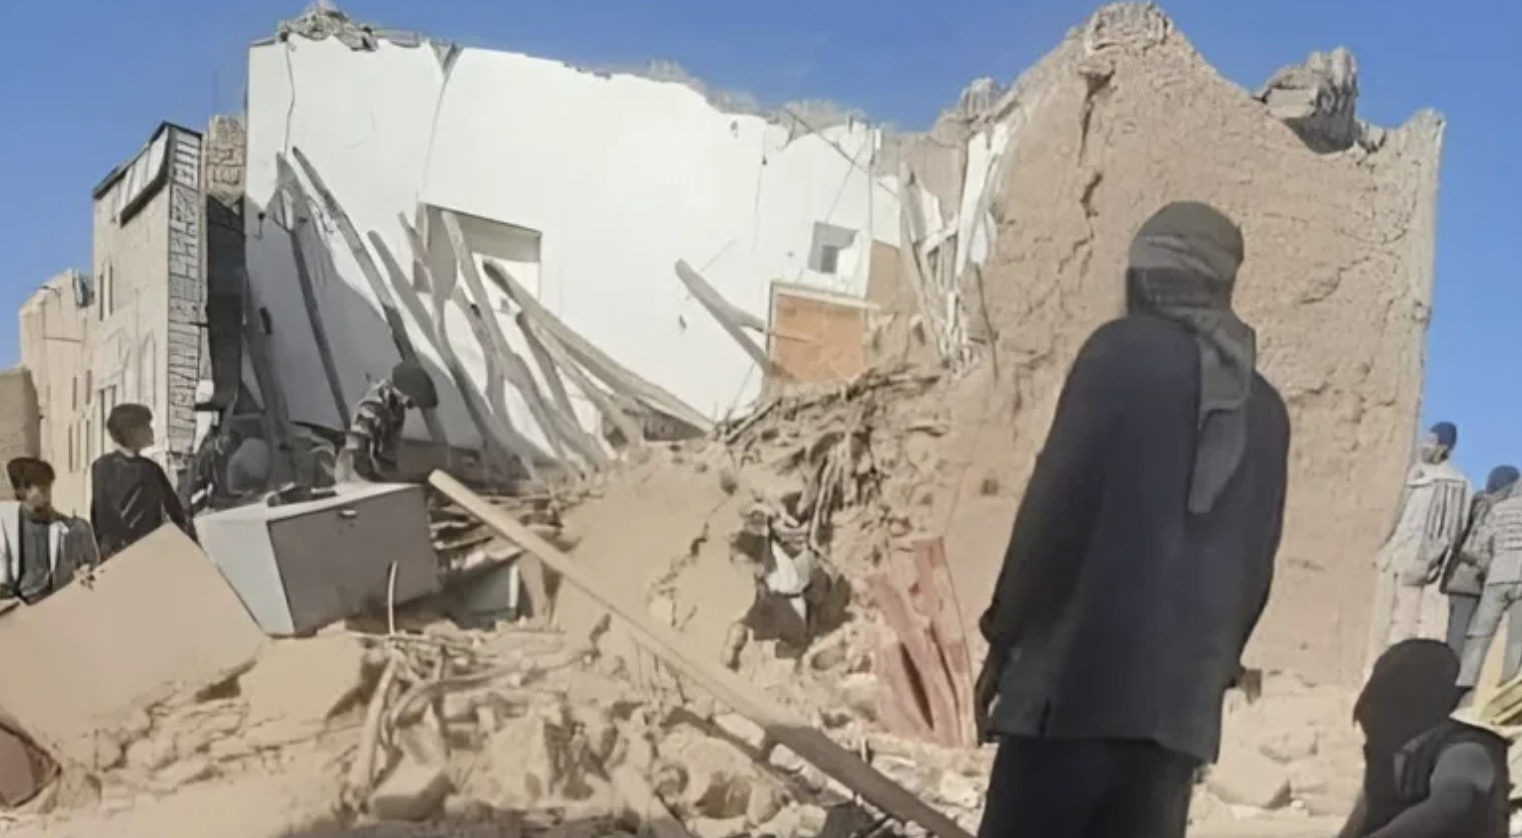 Civilian Houses Blown Up in Yemen's Al-Baydha